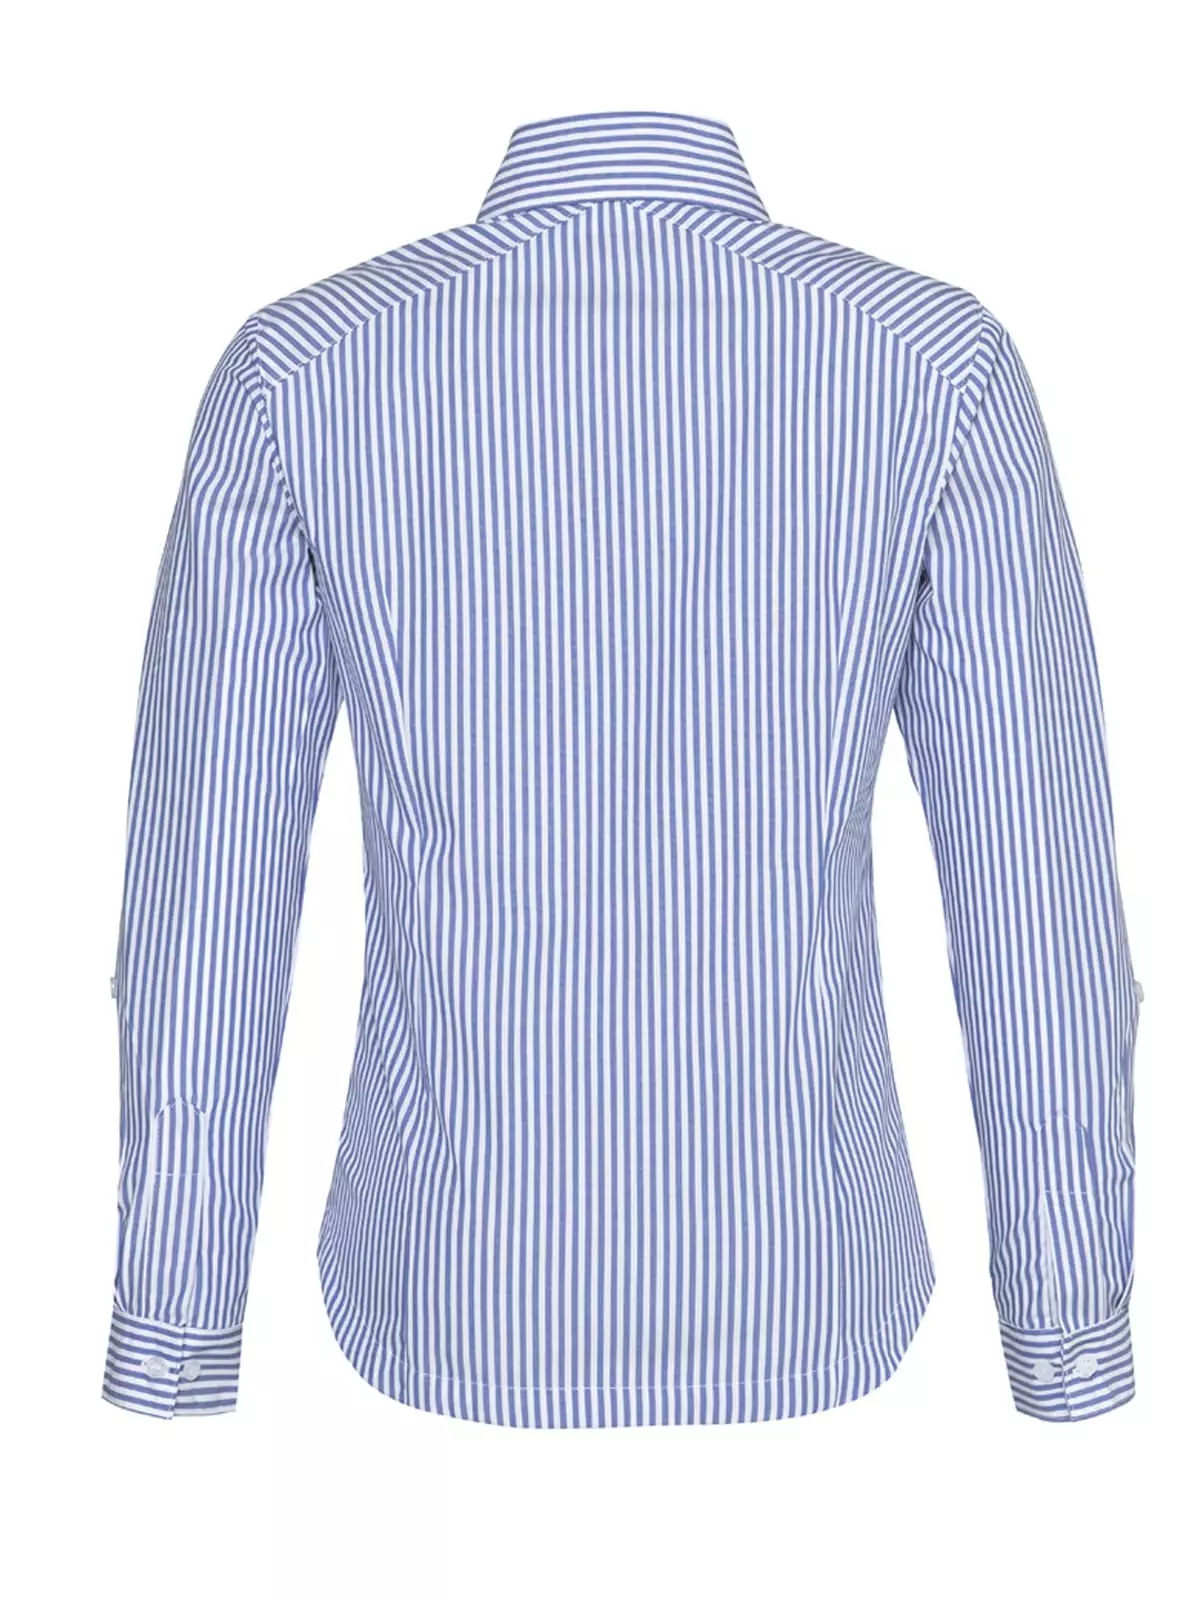 Striped blouse blue 